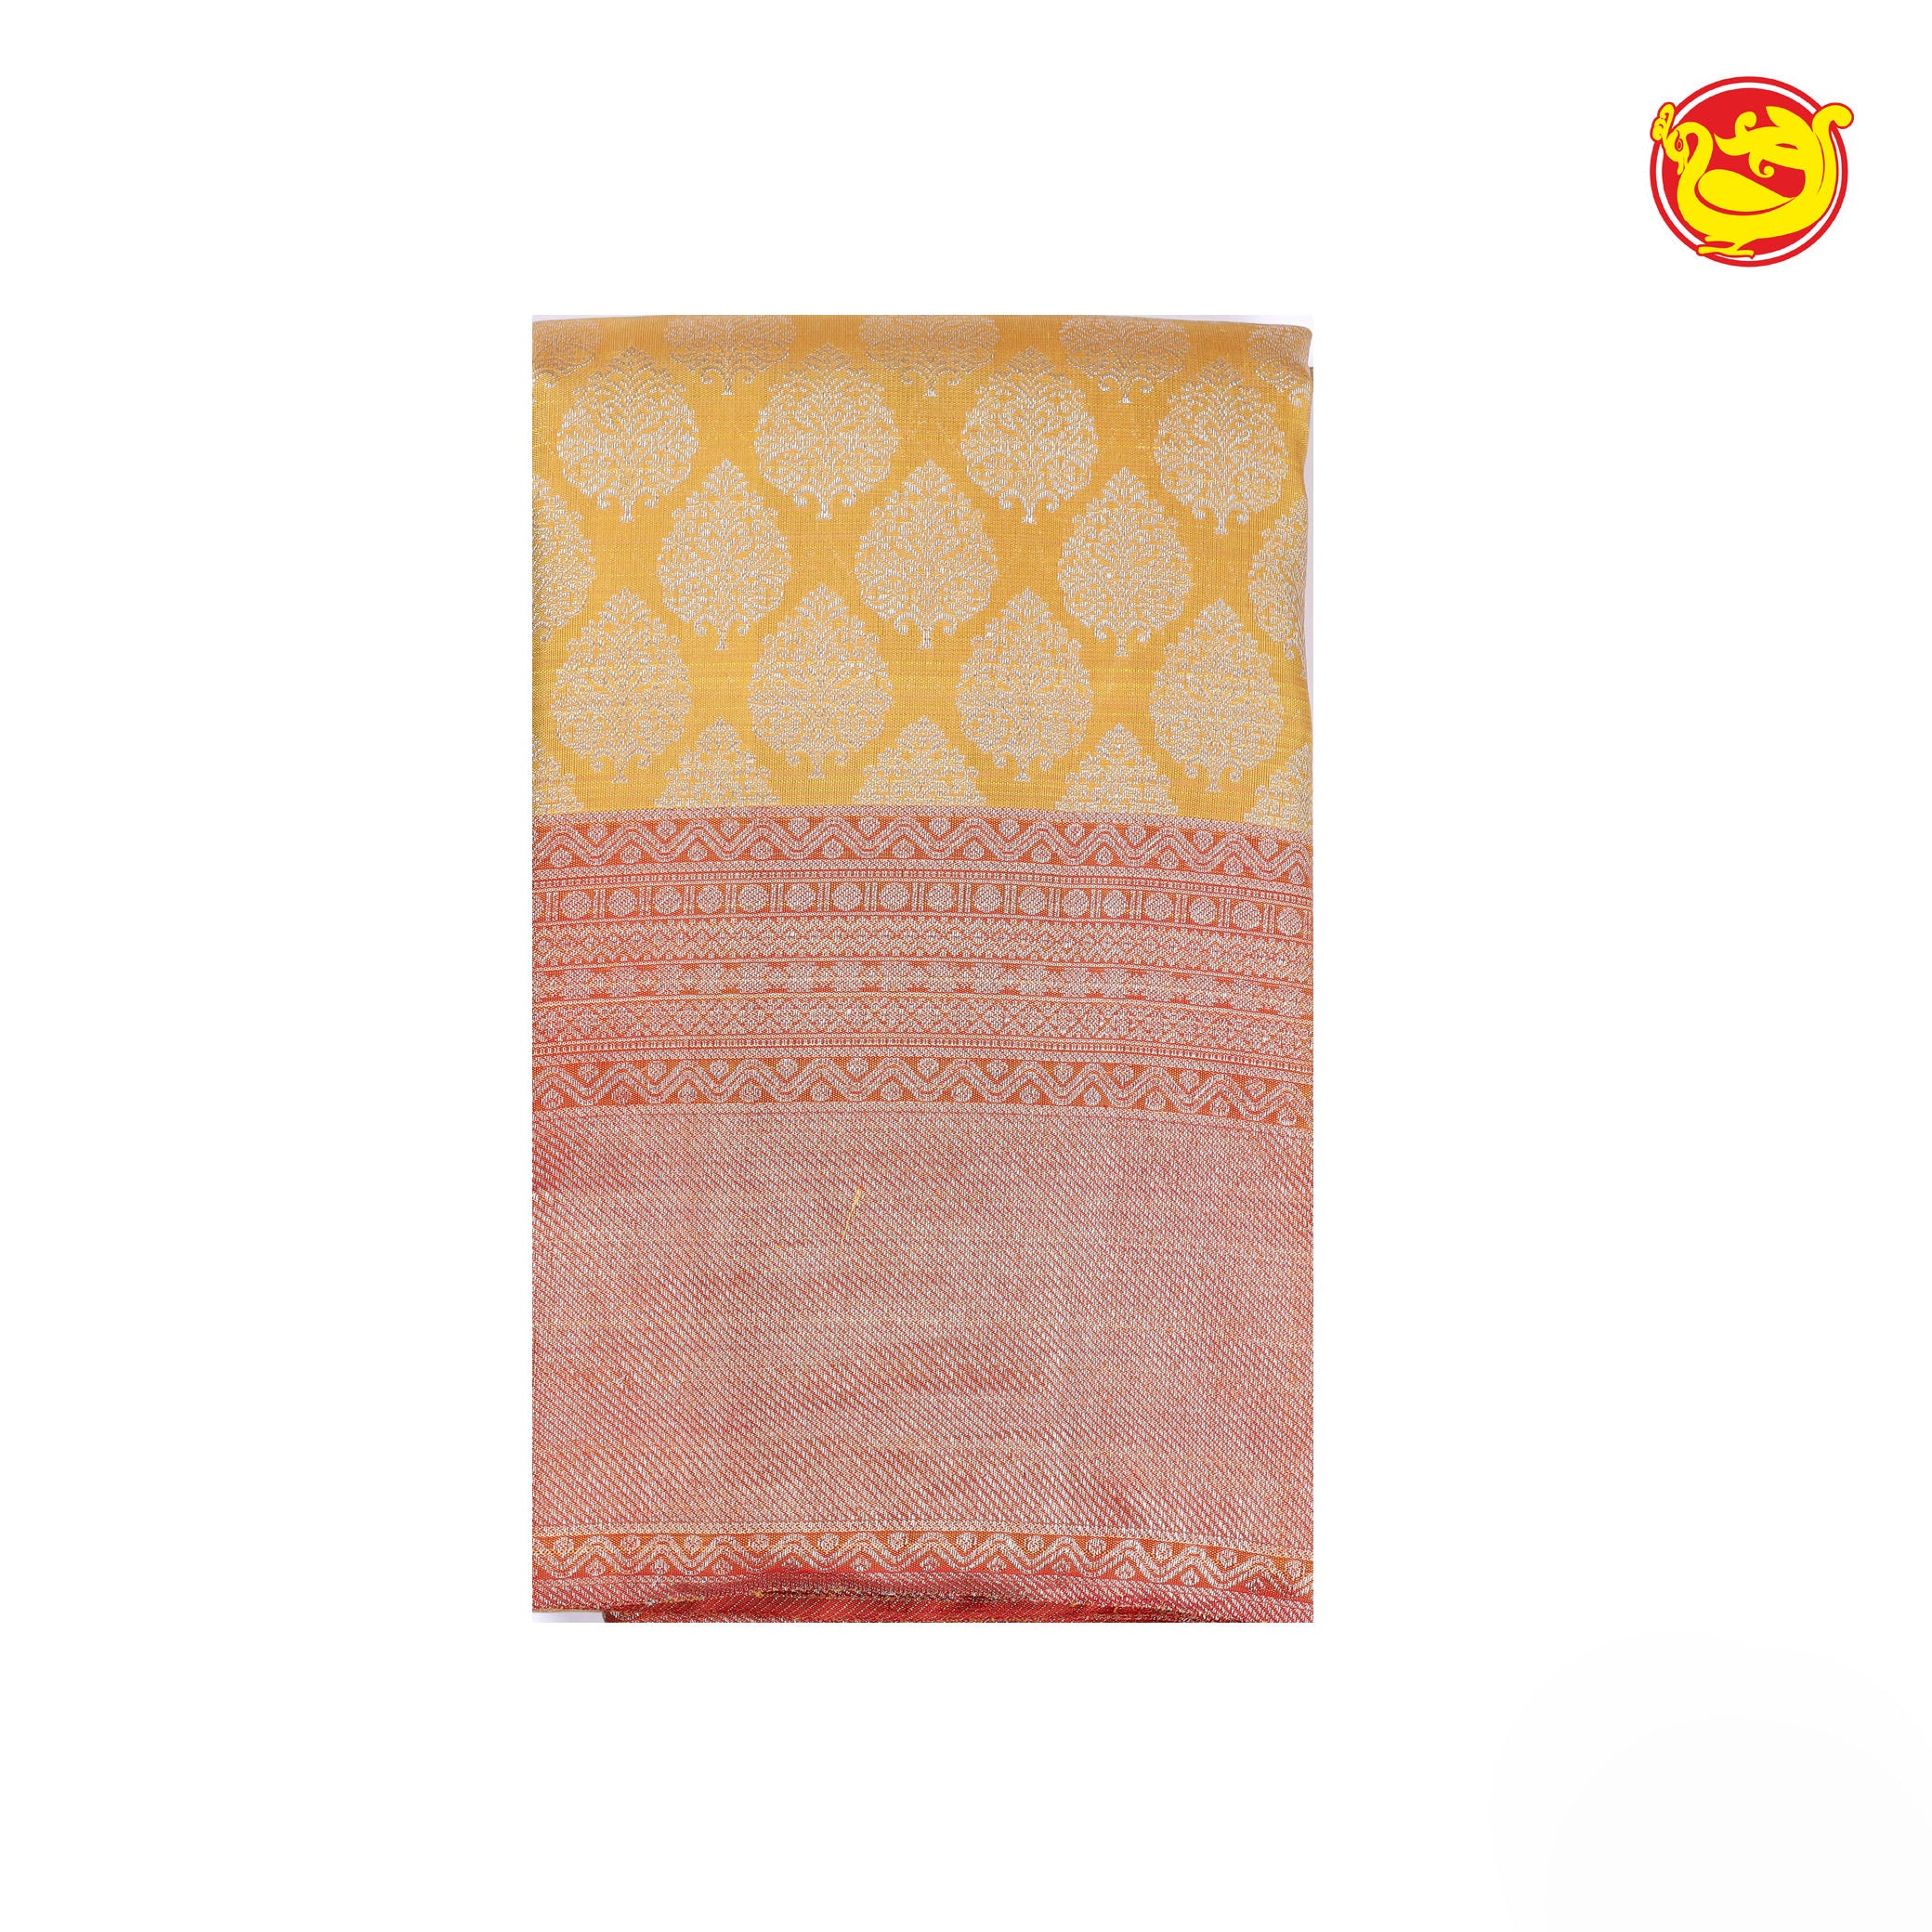 Yellow with deep orange pure Kanchivaram silk saree